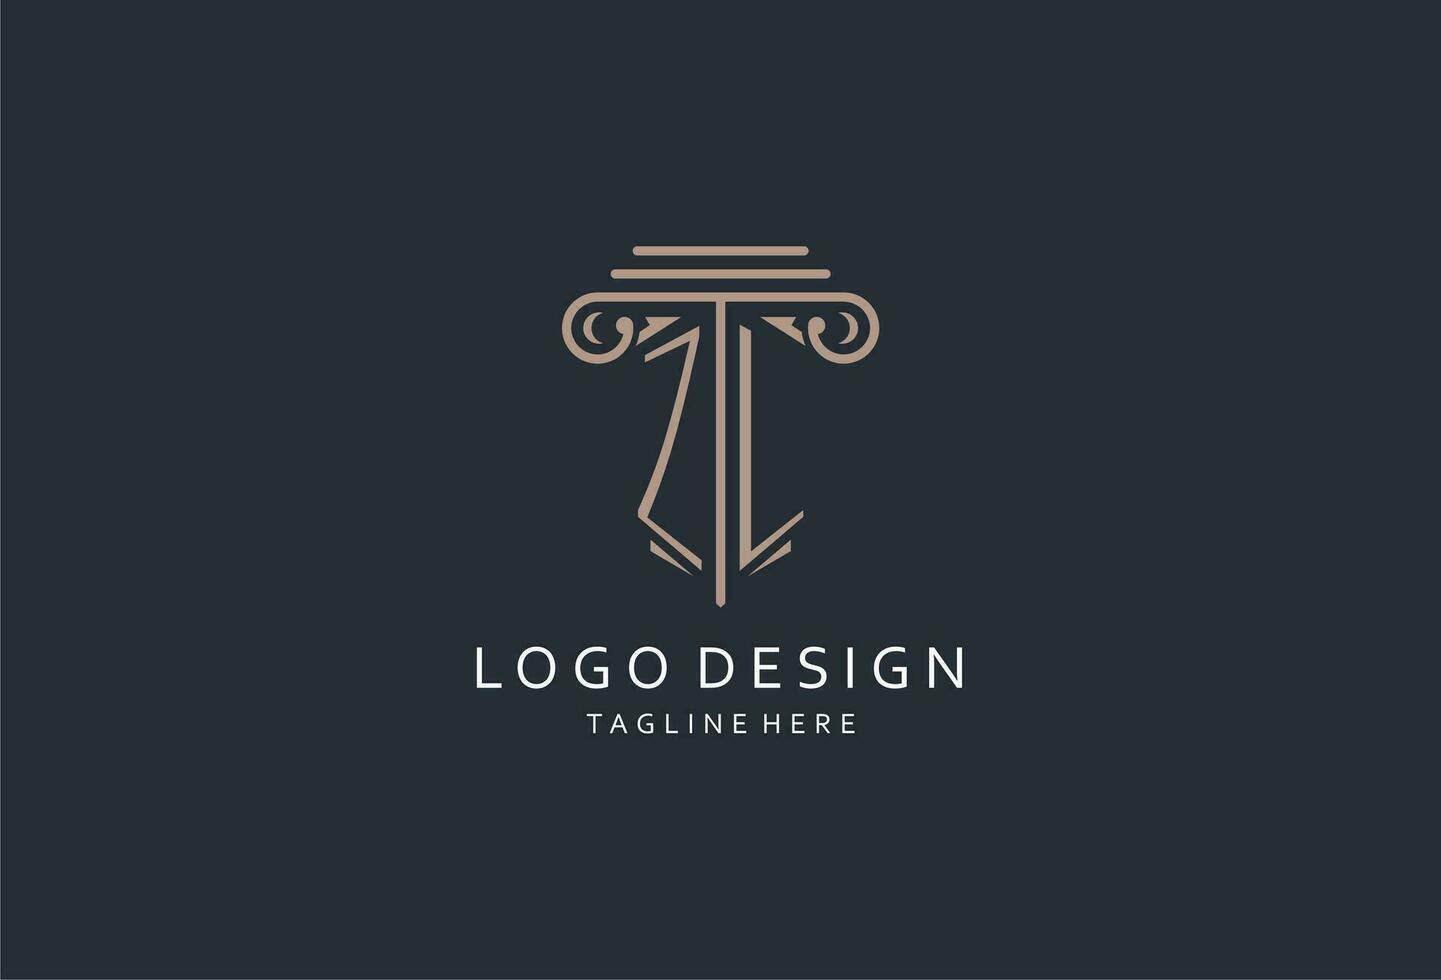 zl monograma logotipo com pilar forma ícone, luxo e elegante Projeto logotipo para lei empresa inicial estilo logotipo vetor